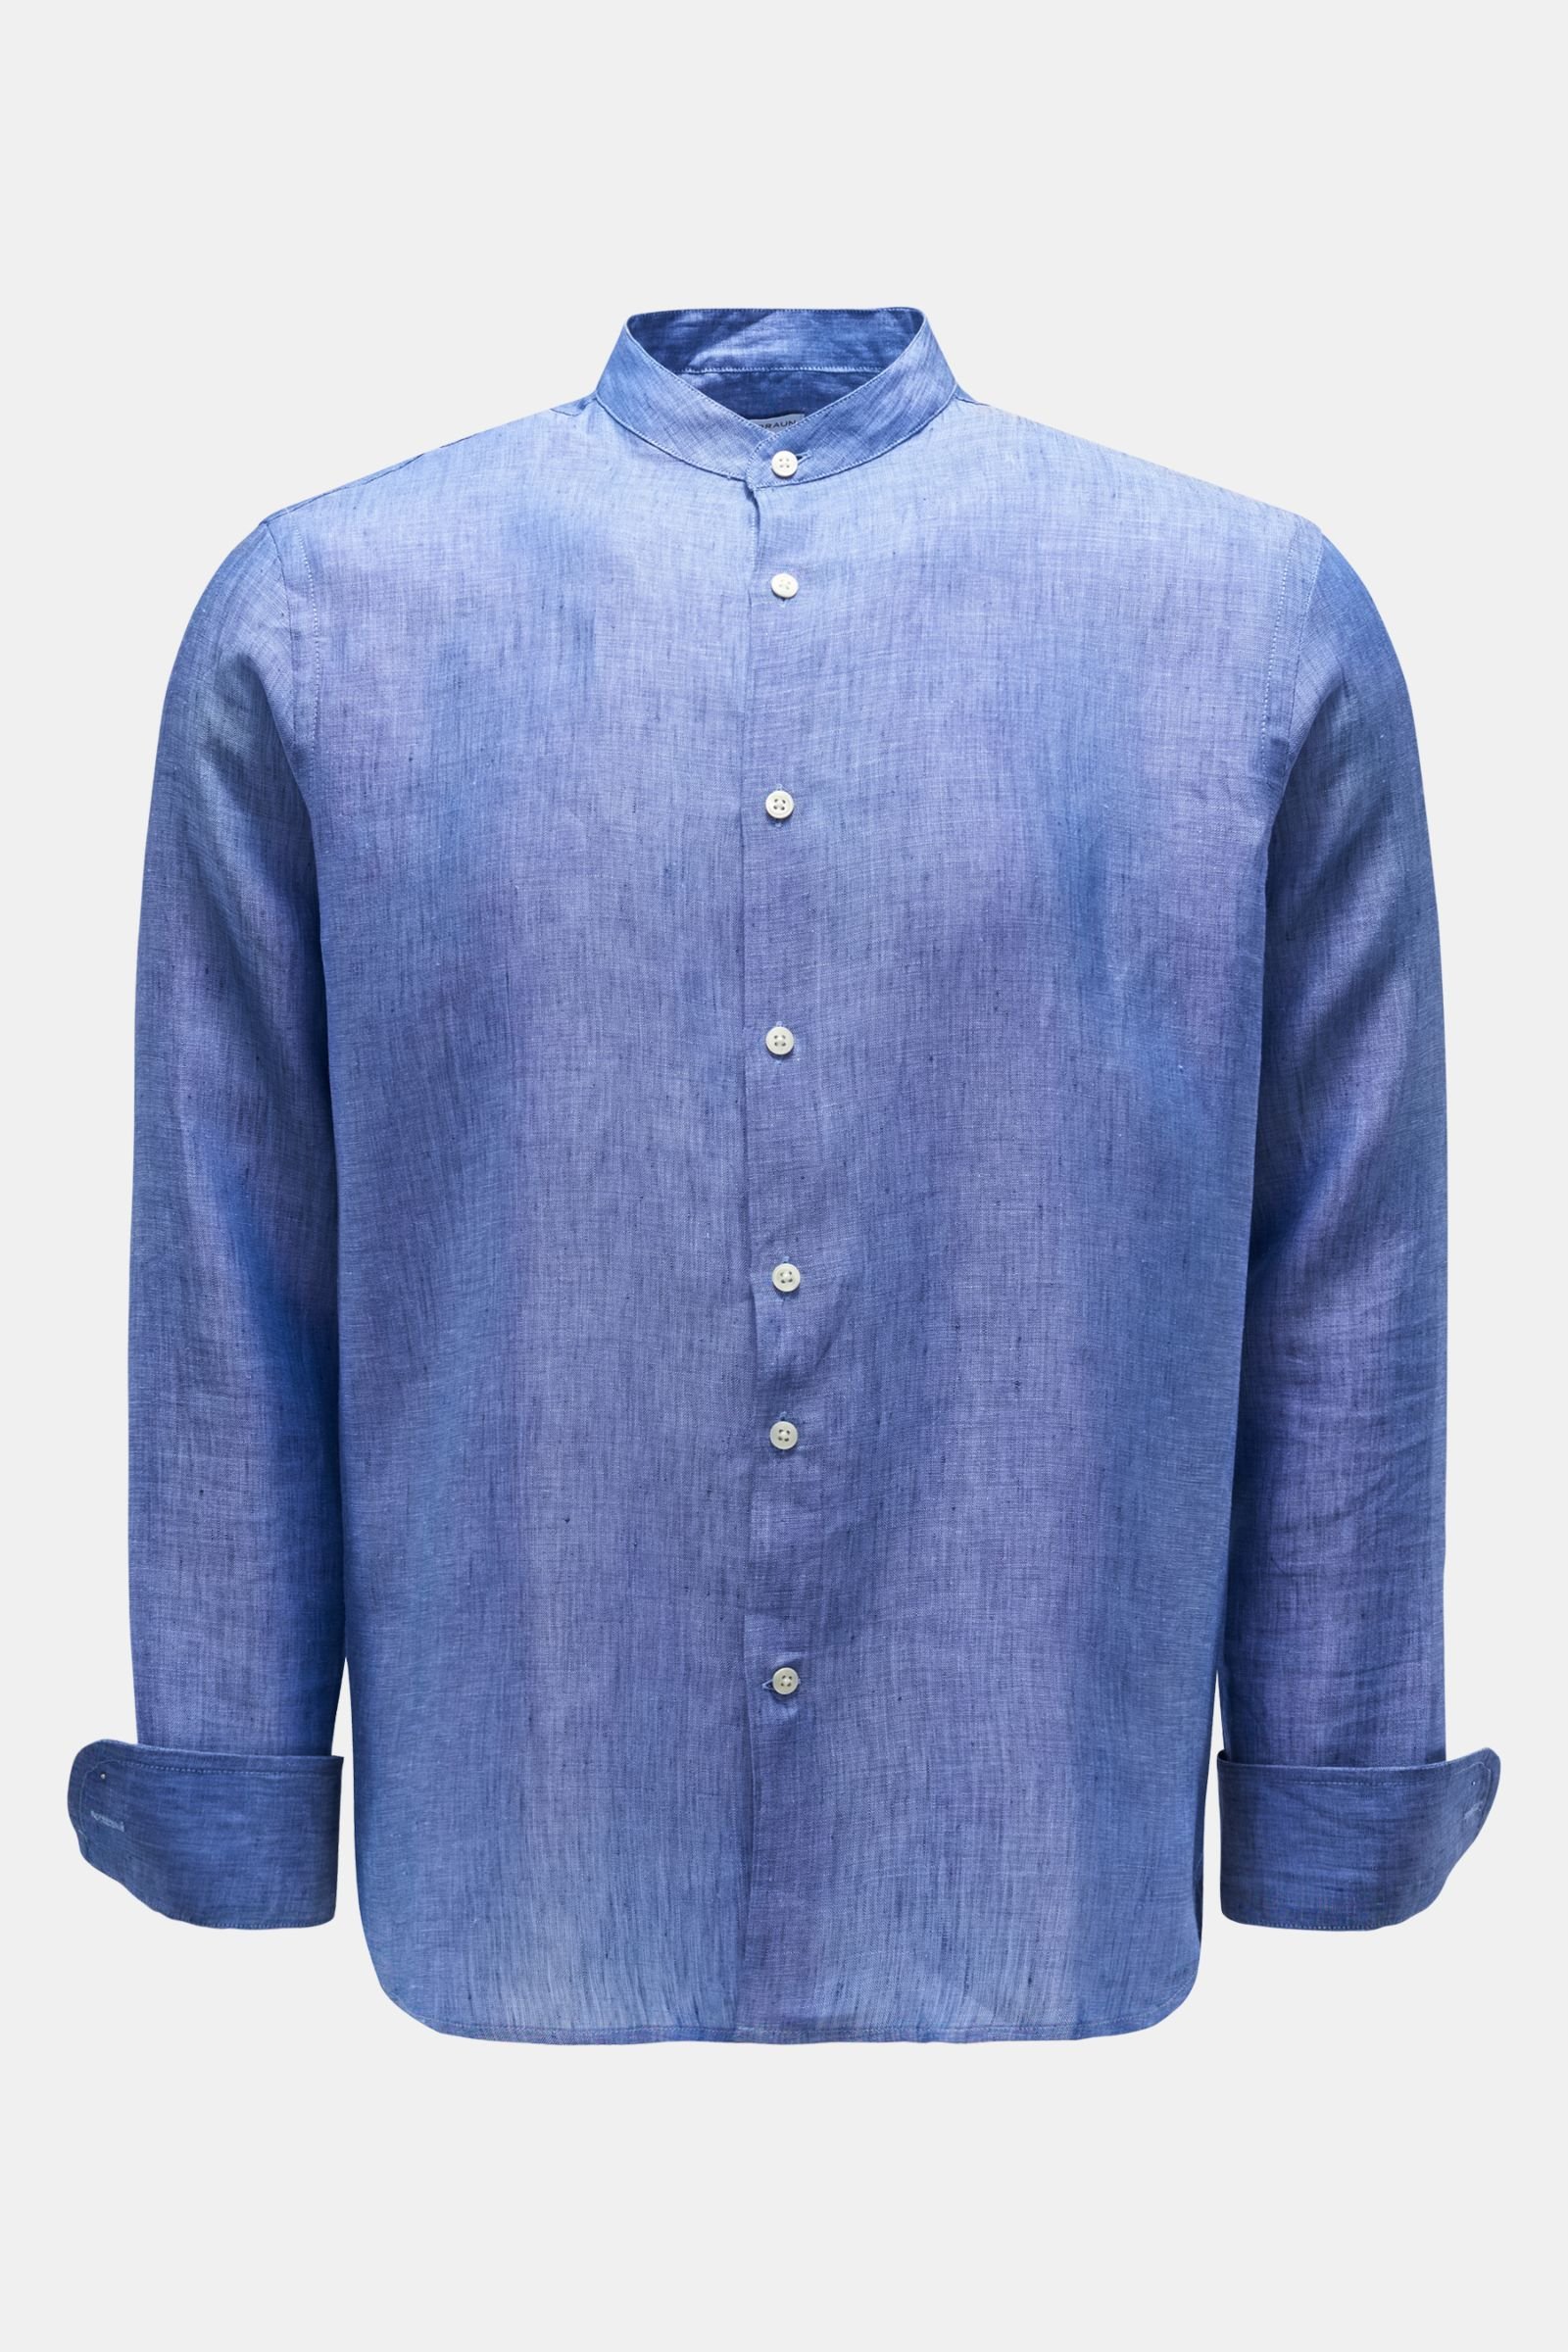 Linen shirt grandad collar smoky blue